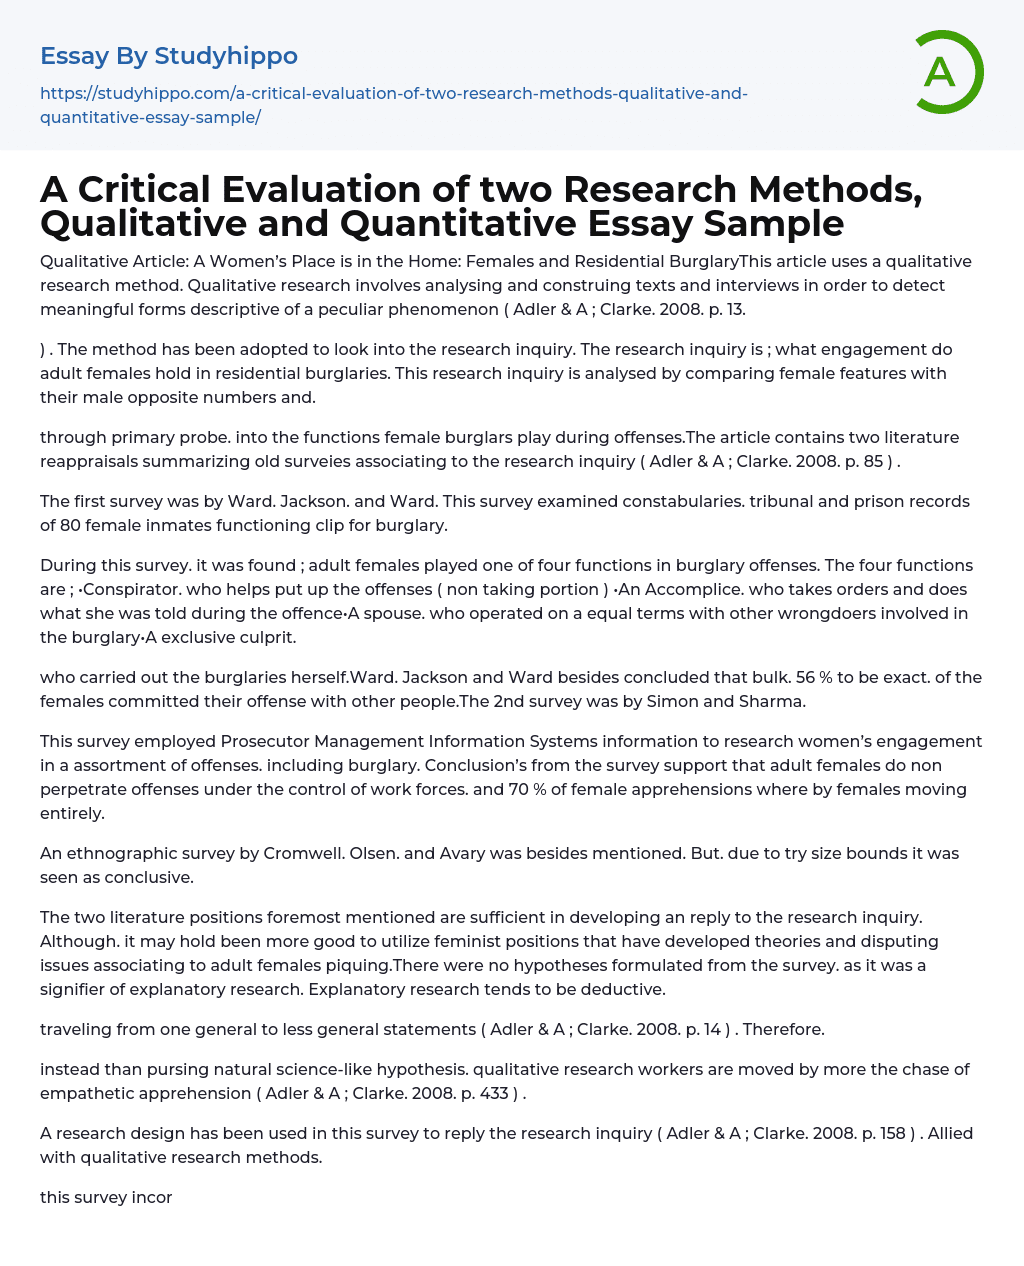 A Critical Evaluation of two Research Methods, Qualitative and Quantitative Essay Sample